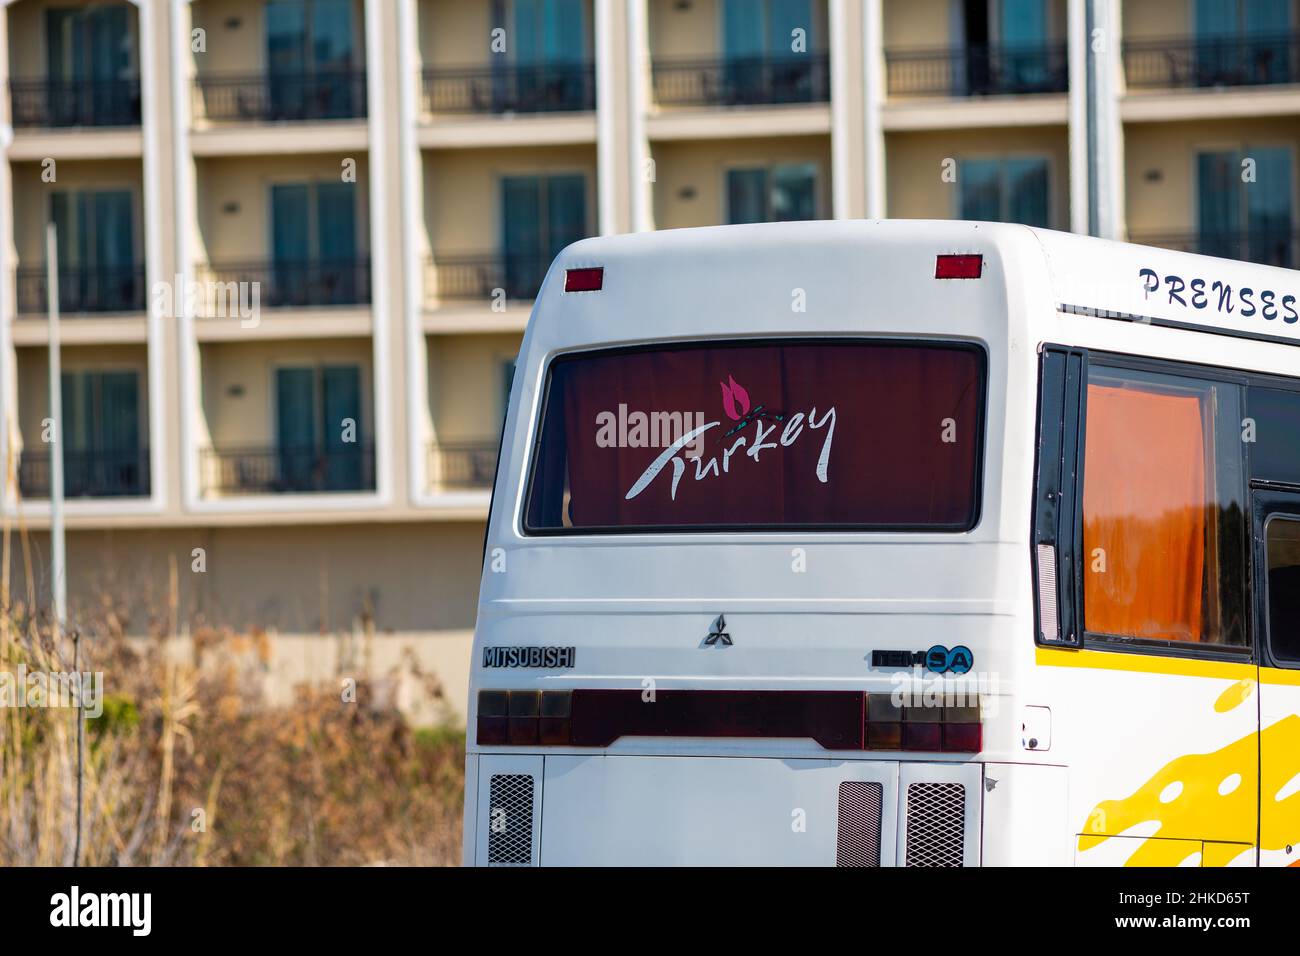 Antalya, Turchia - 18 gennaio 2020: Autobus turco su una strada ad Antalya Foto Stock